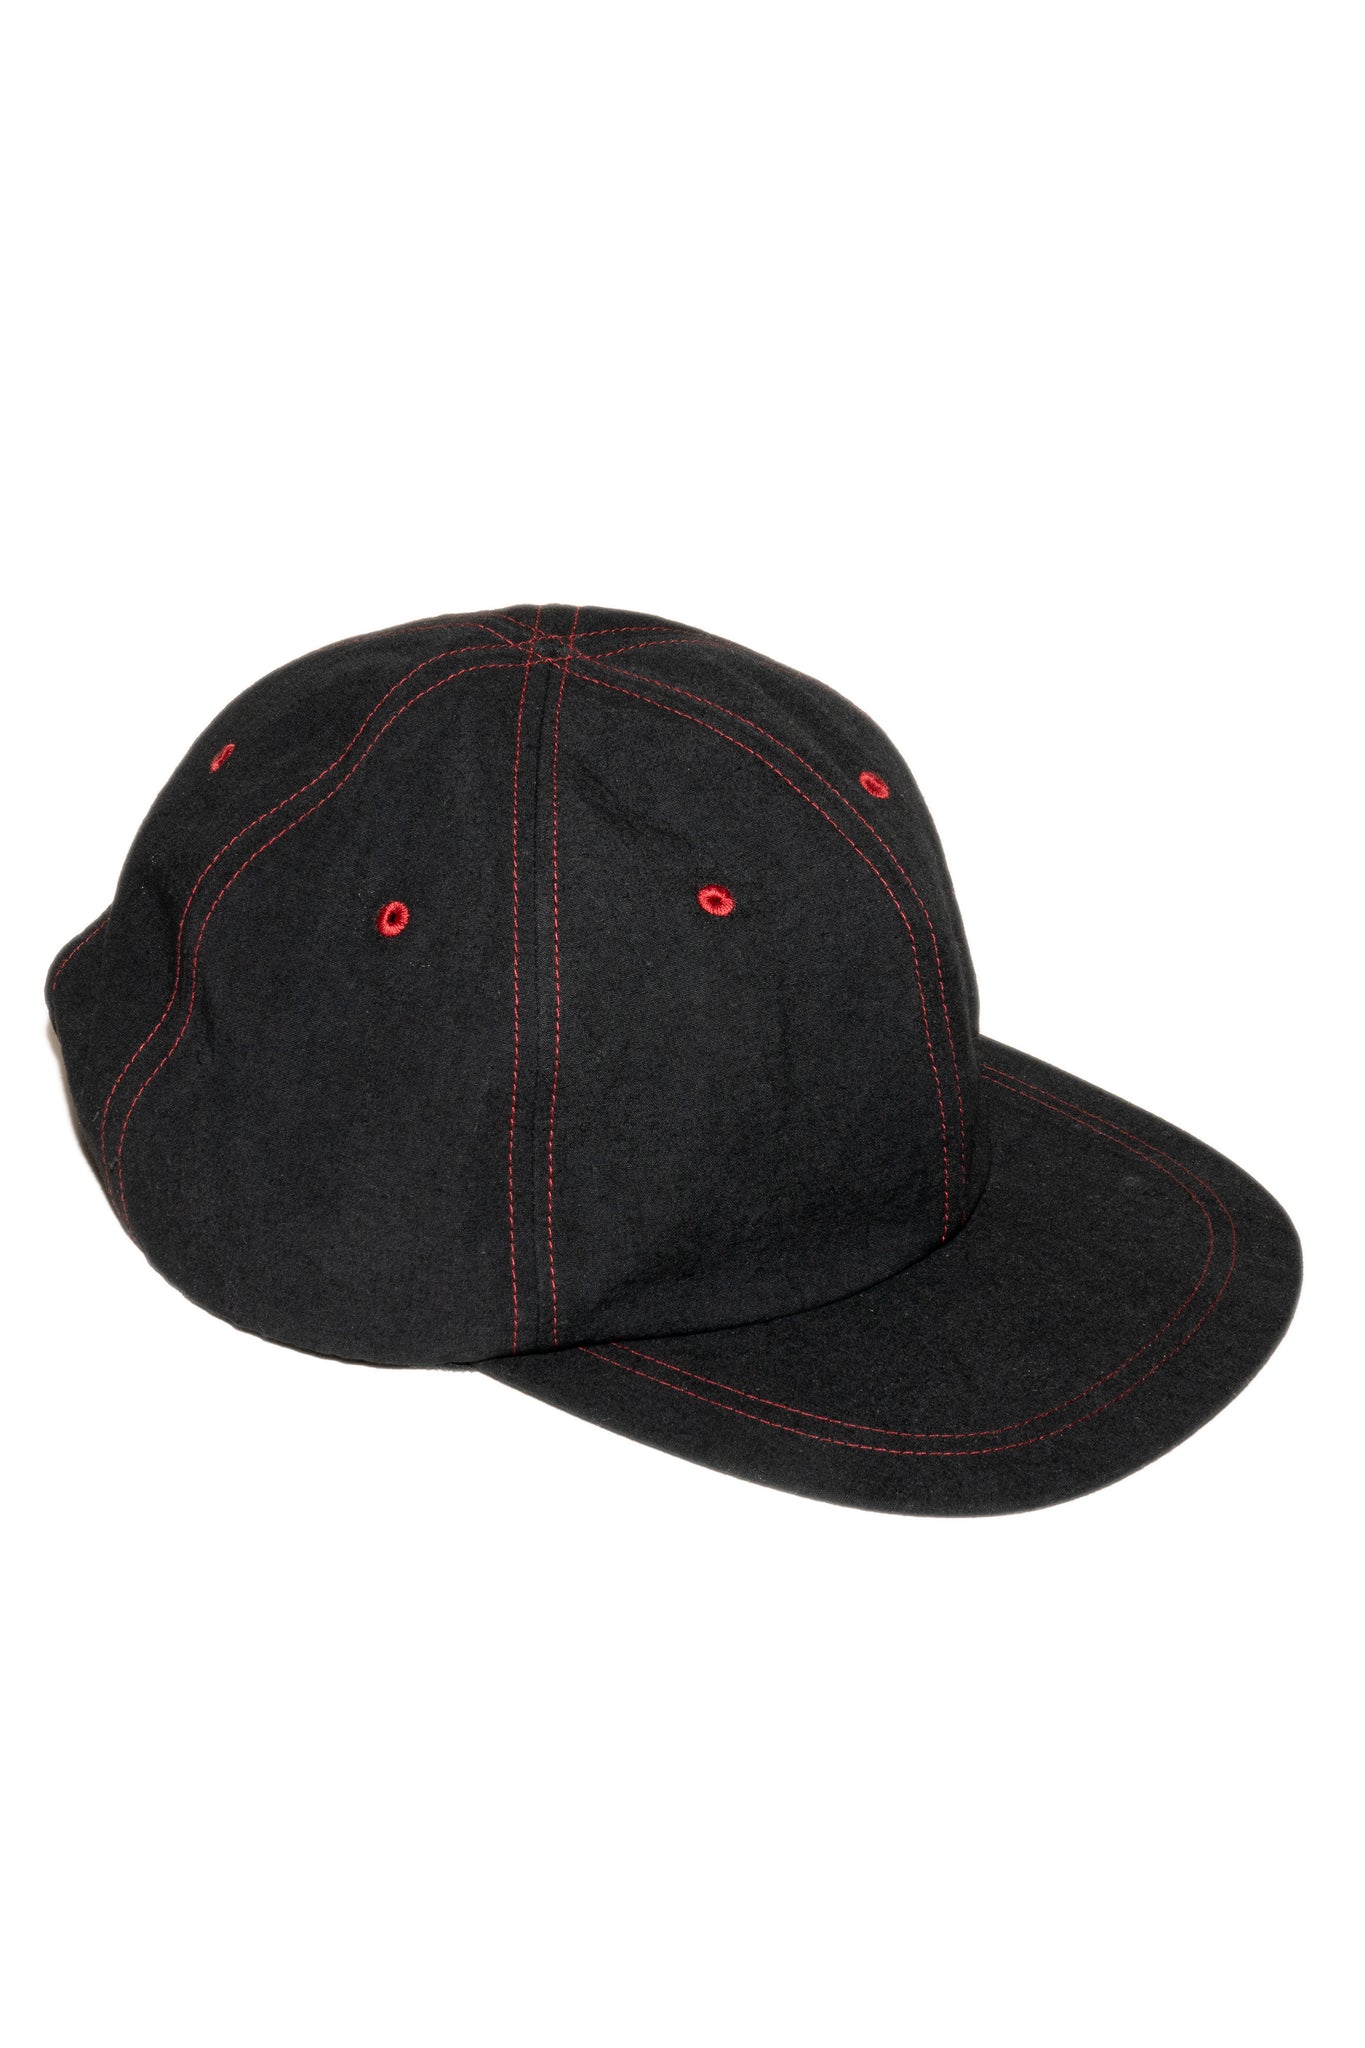 JHAKX - CLASSIC "HEMP" HAT IN BLACK/RED